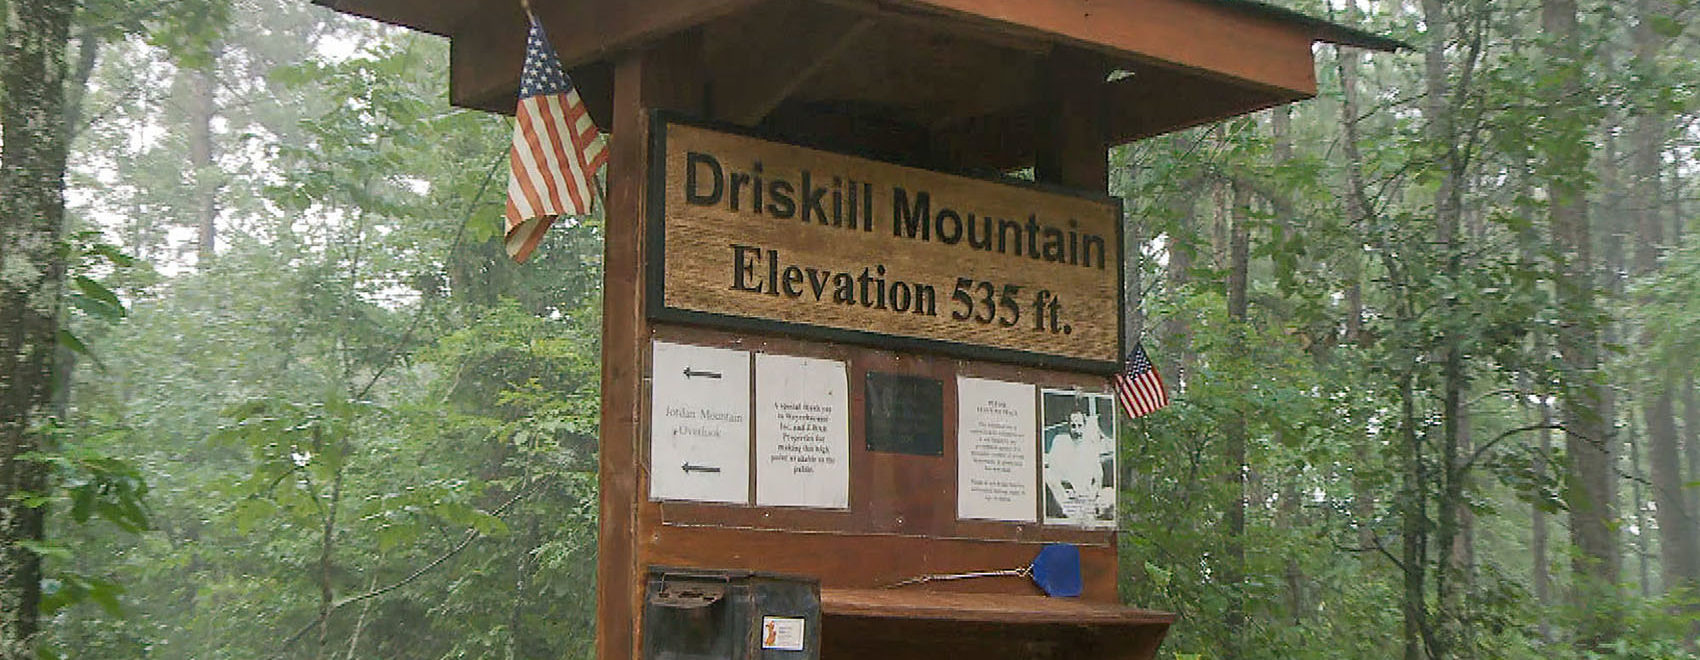 Top of Driskill Mountain, highest point in Louisiana